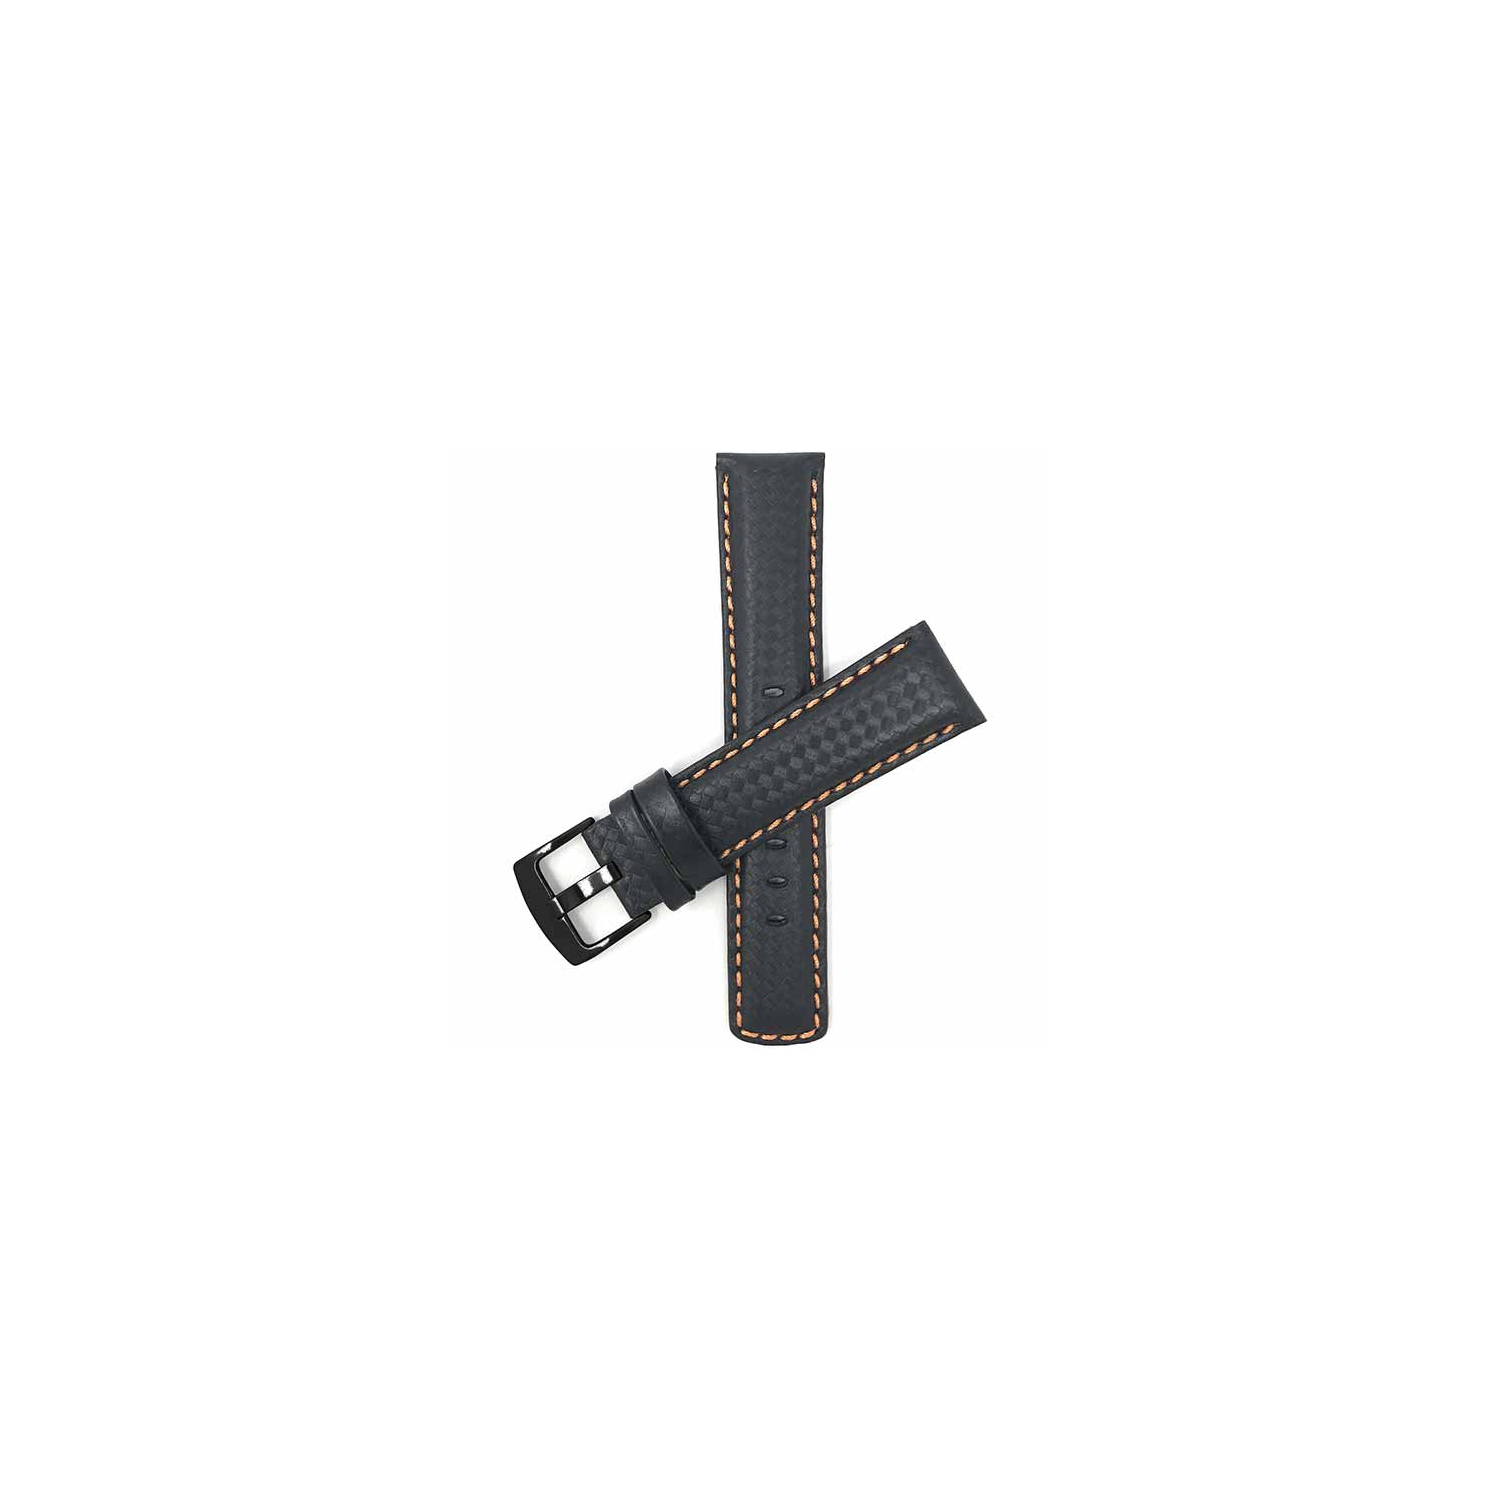 Bandini Mens Leather Carbon Fiber Pattern Smart Watch Band Strap For Michael Kors MKGO - 20mm, Black / Orange / Black Buckle